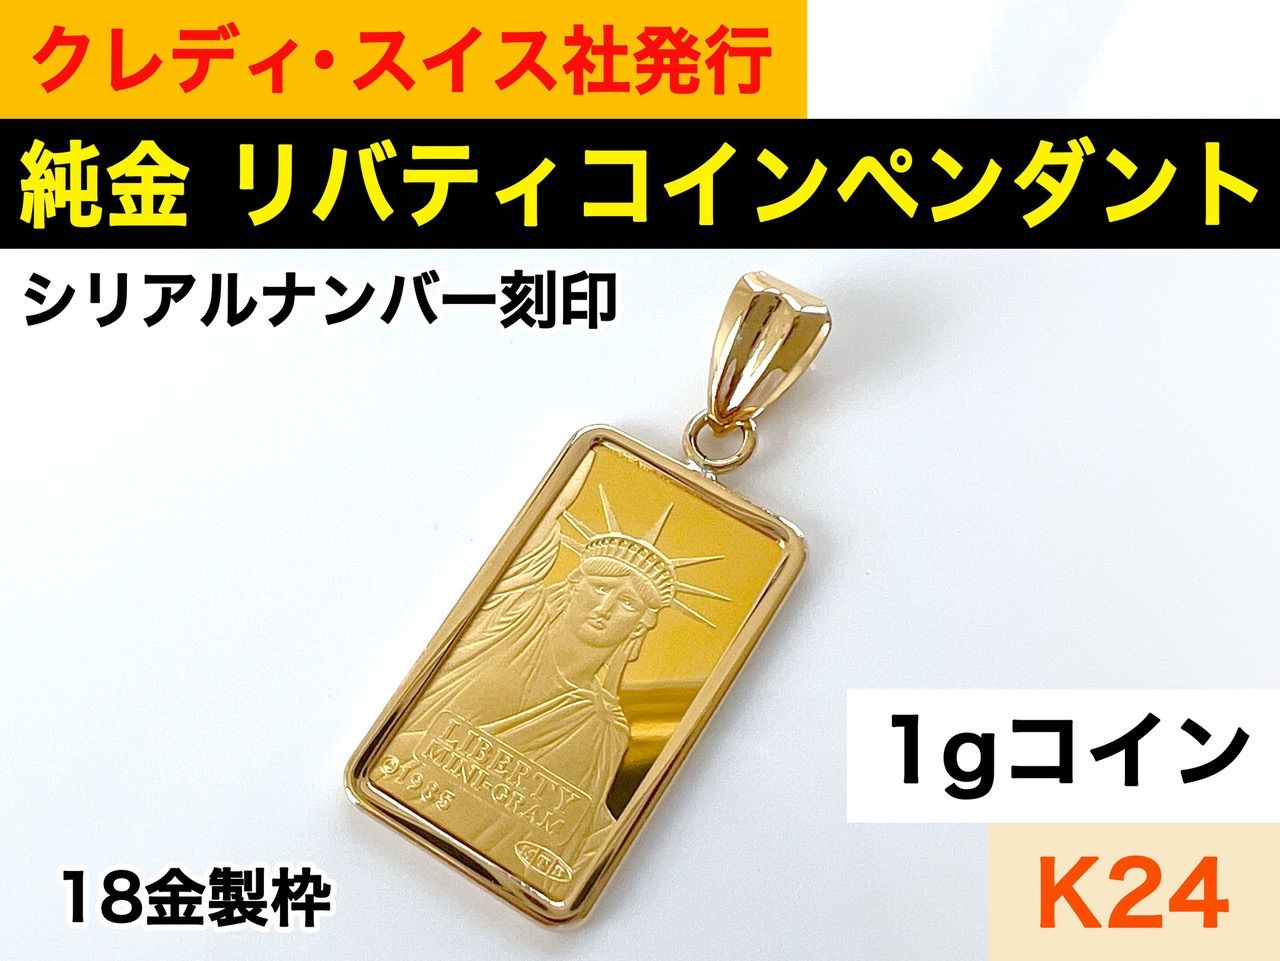 K24/K18 インゴット ネックレストップ ペンダントトップ 純金 スイス - キャラクターグッズ